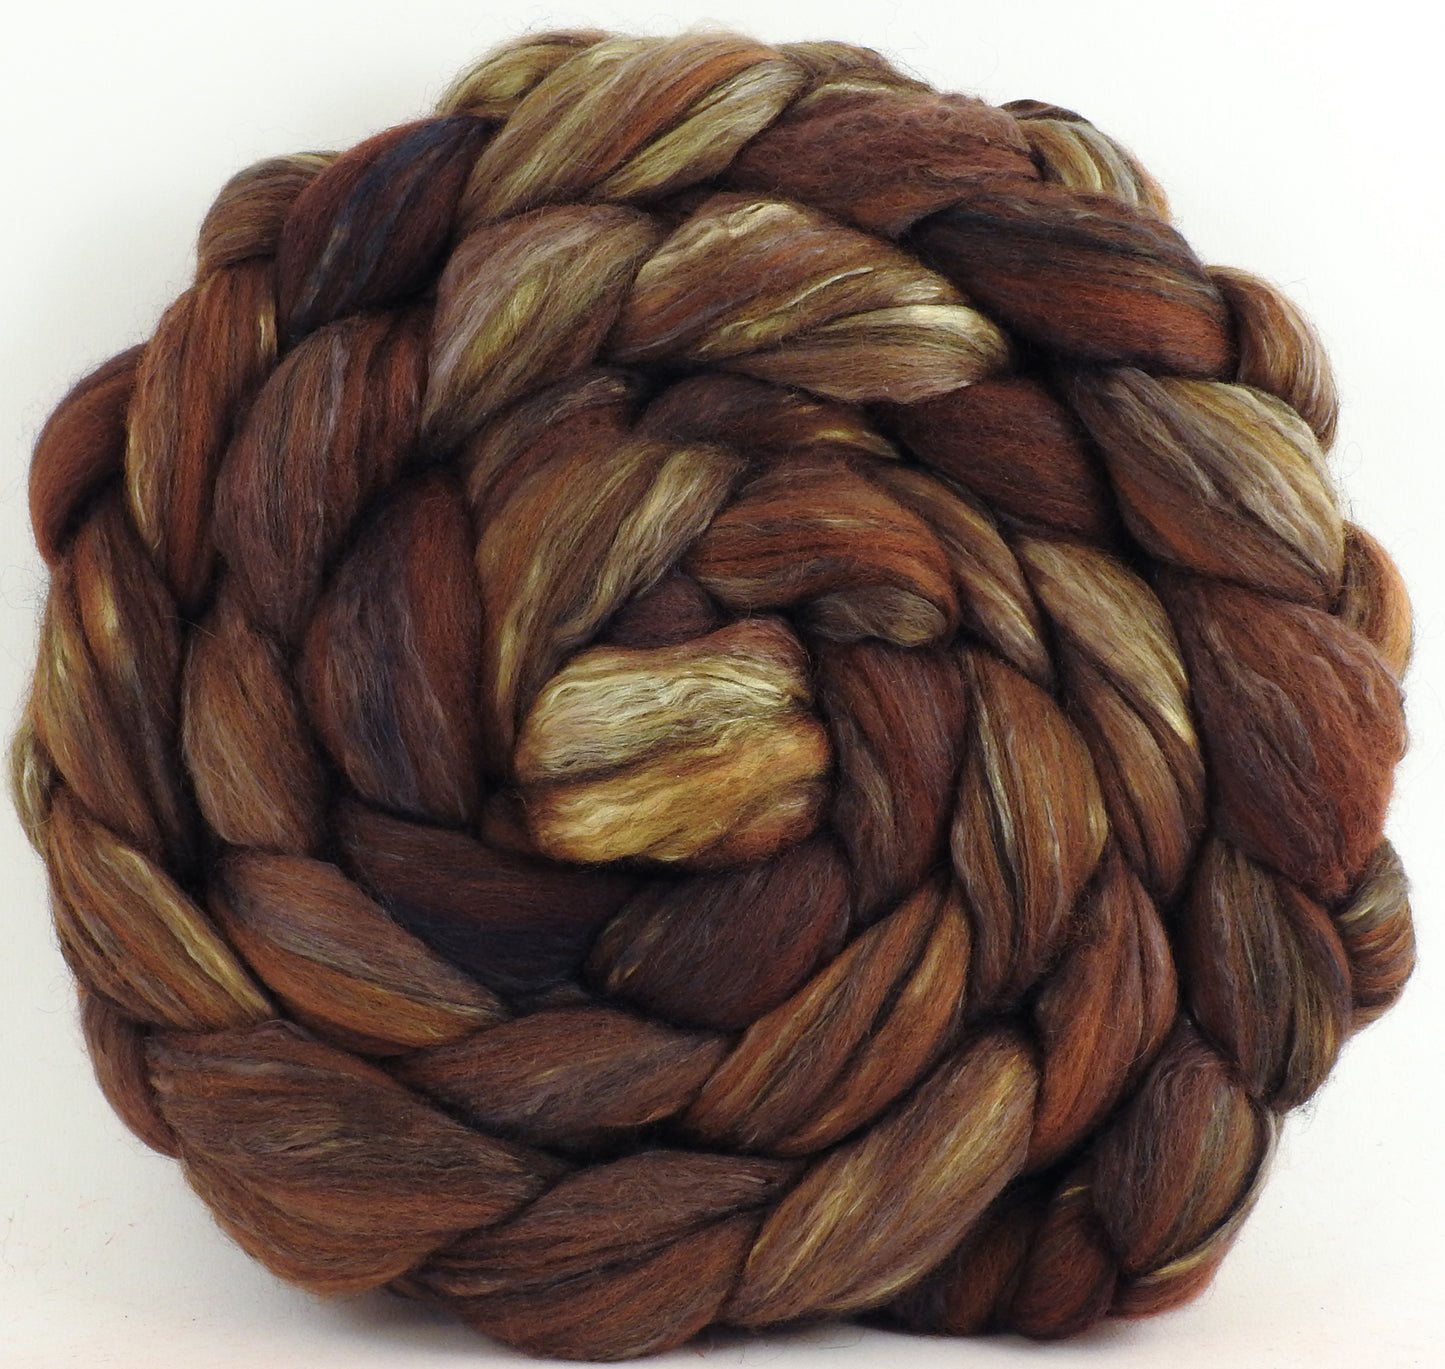 Bronze - Batt in a Braid #9 - Superfine Merino/ Mulberry Silk / Black Alpaca (50/40/10)